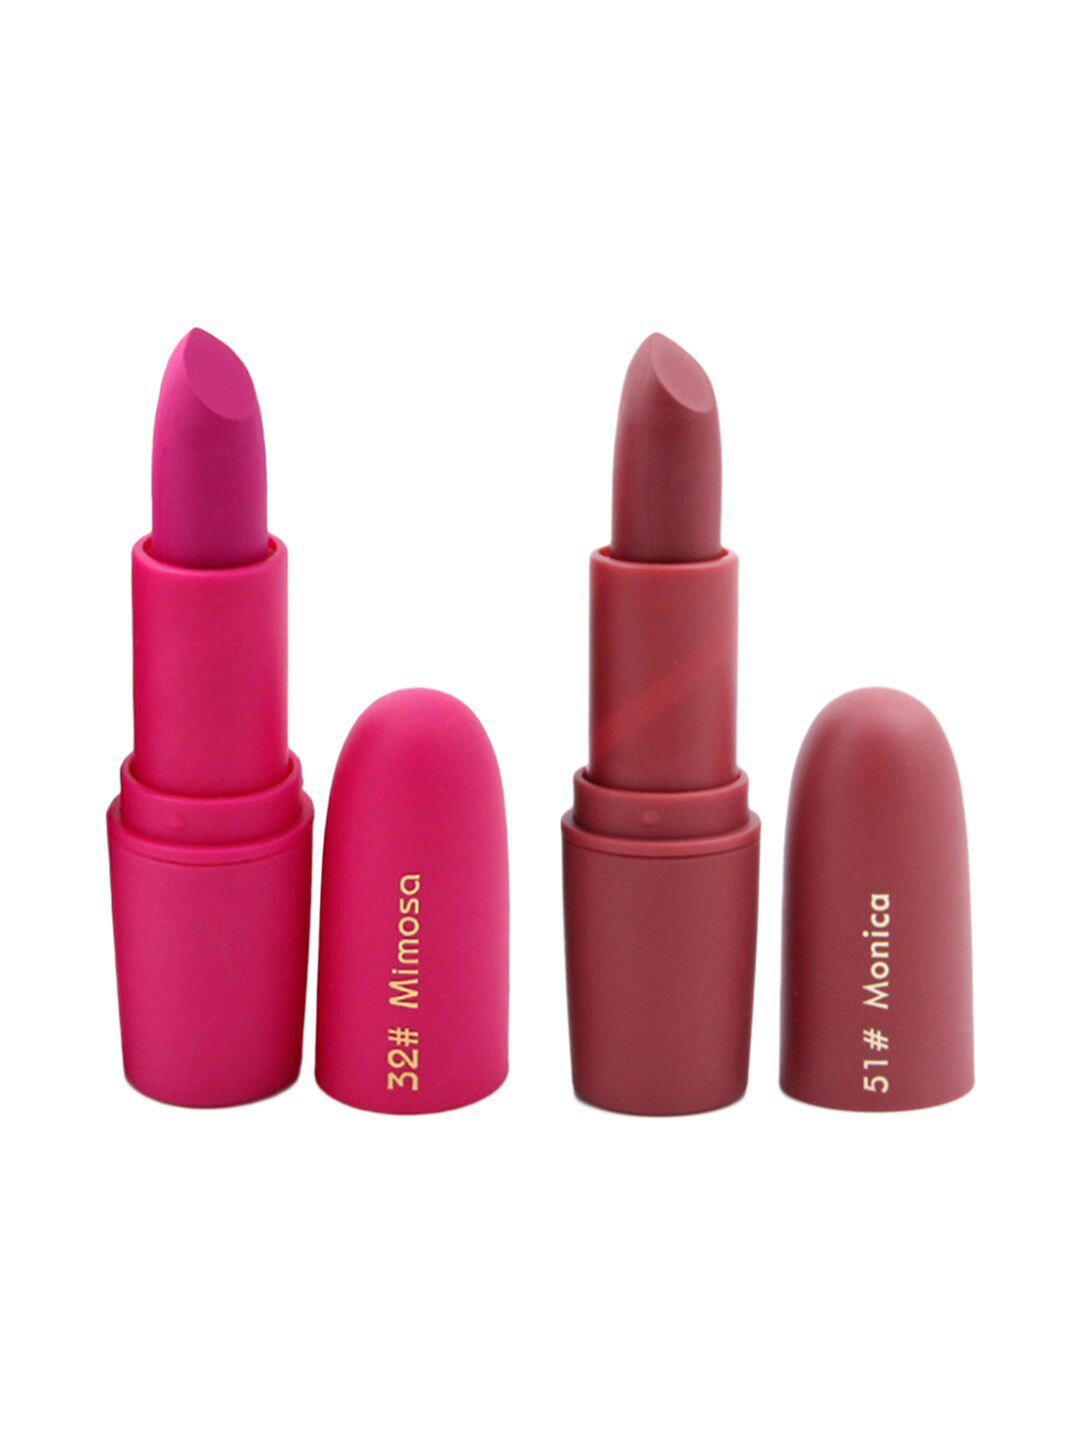 MISS ROSE Professional Make-Up Set of 2 Matte Creamy Lipsticks - Mimosa 32 & Monica 51 Price in India